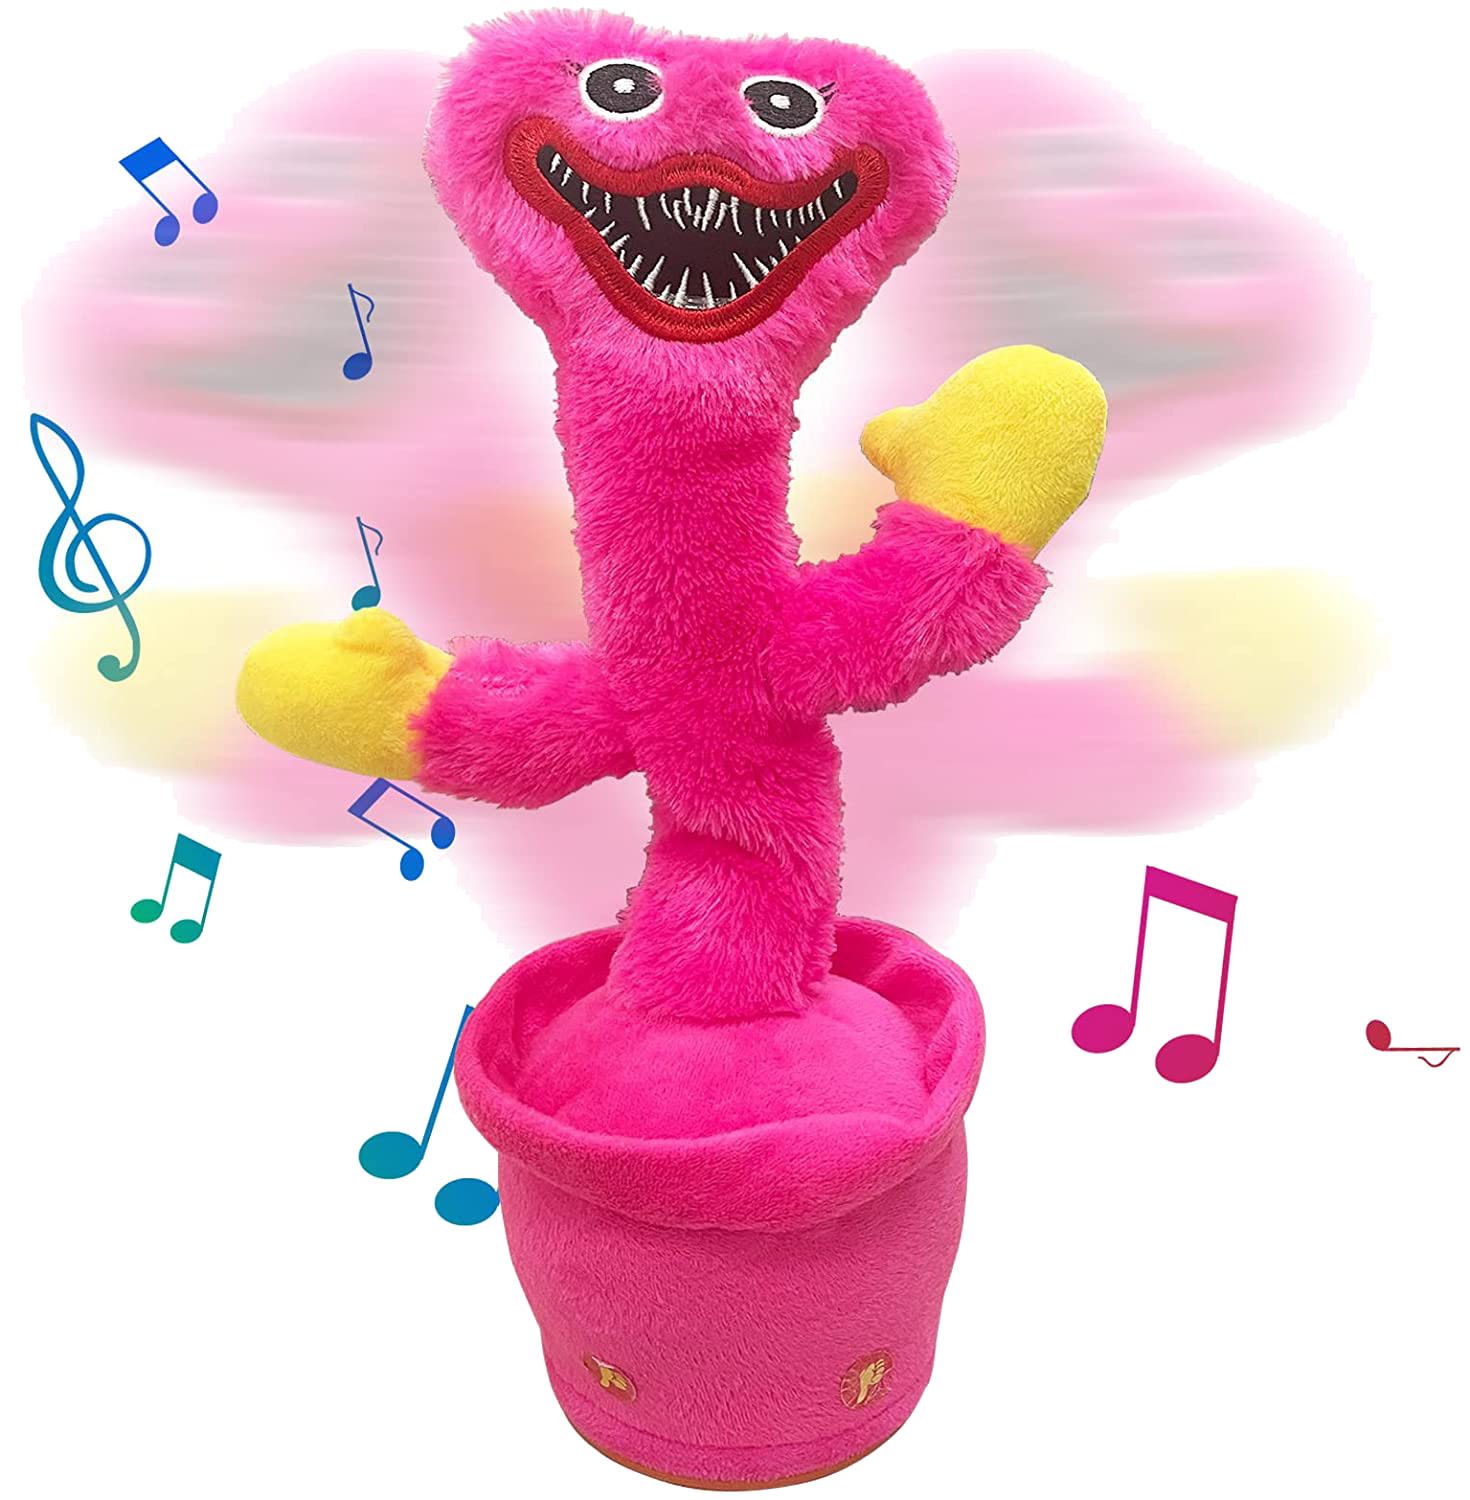 Пляшущая игрушка. Кисси Мисси Танцующий Кактус. Танцующий Хаги ваги игрушка Кактус. Кисси Мисси розовая игрушка. Танцующая мягкая игрушка музыкальная.